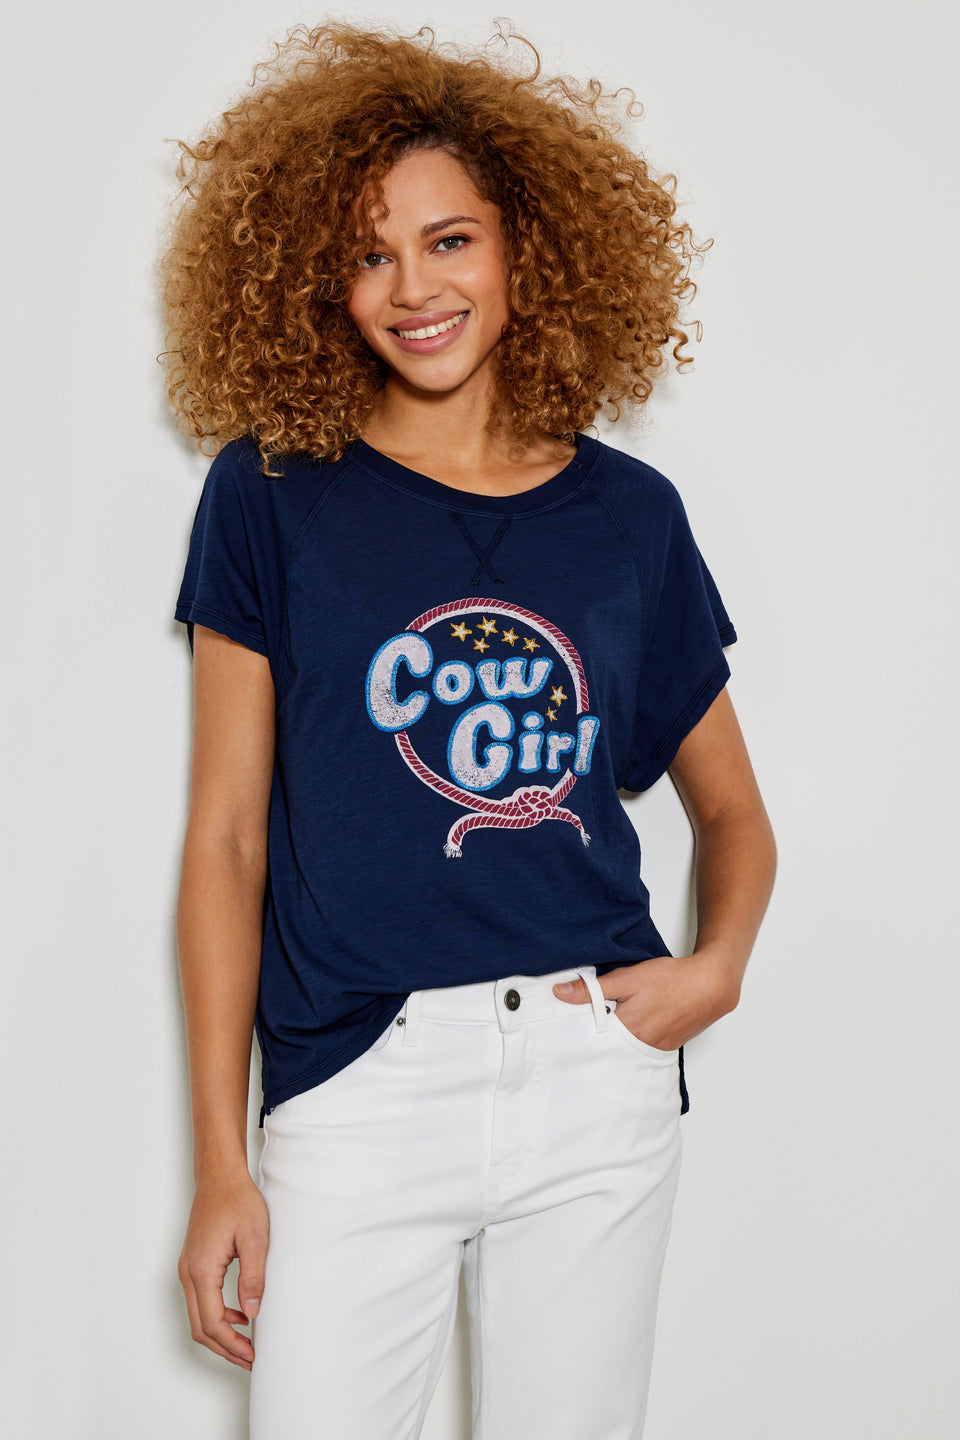 Five Cow Girl T Shirt - Navy